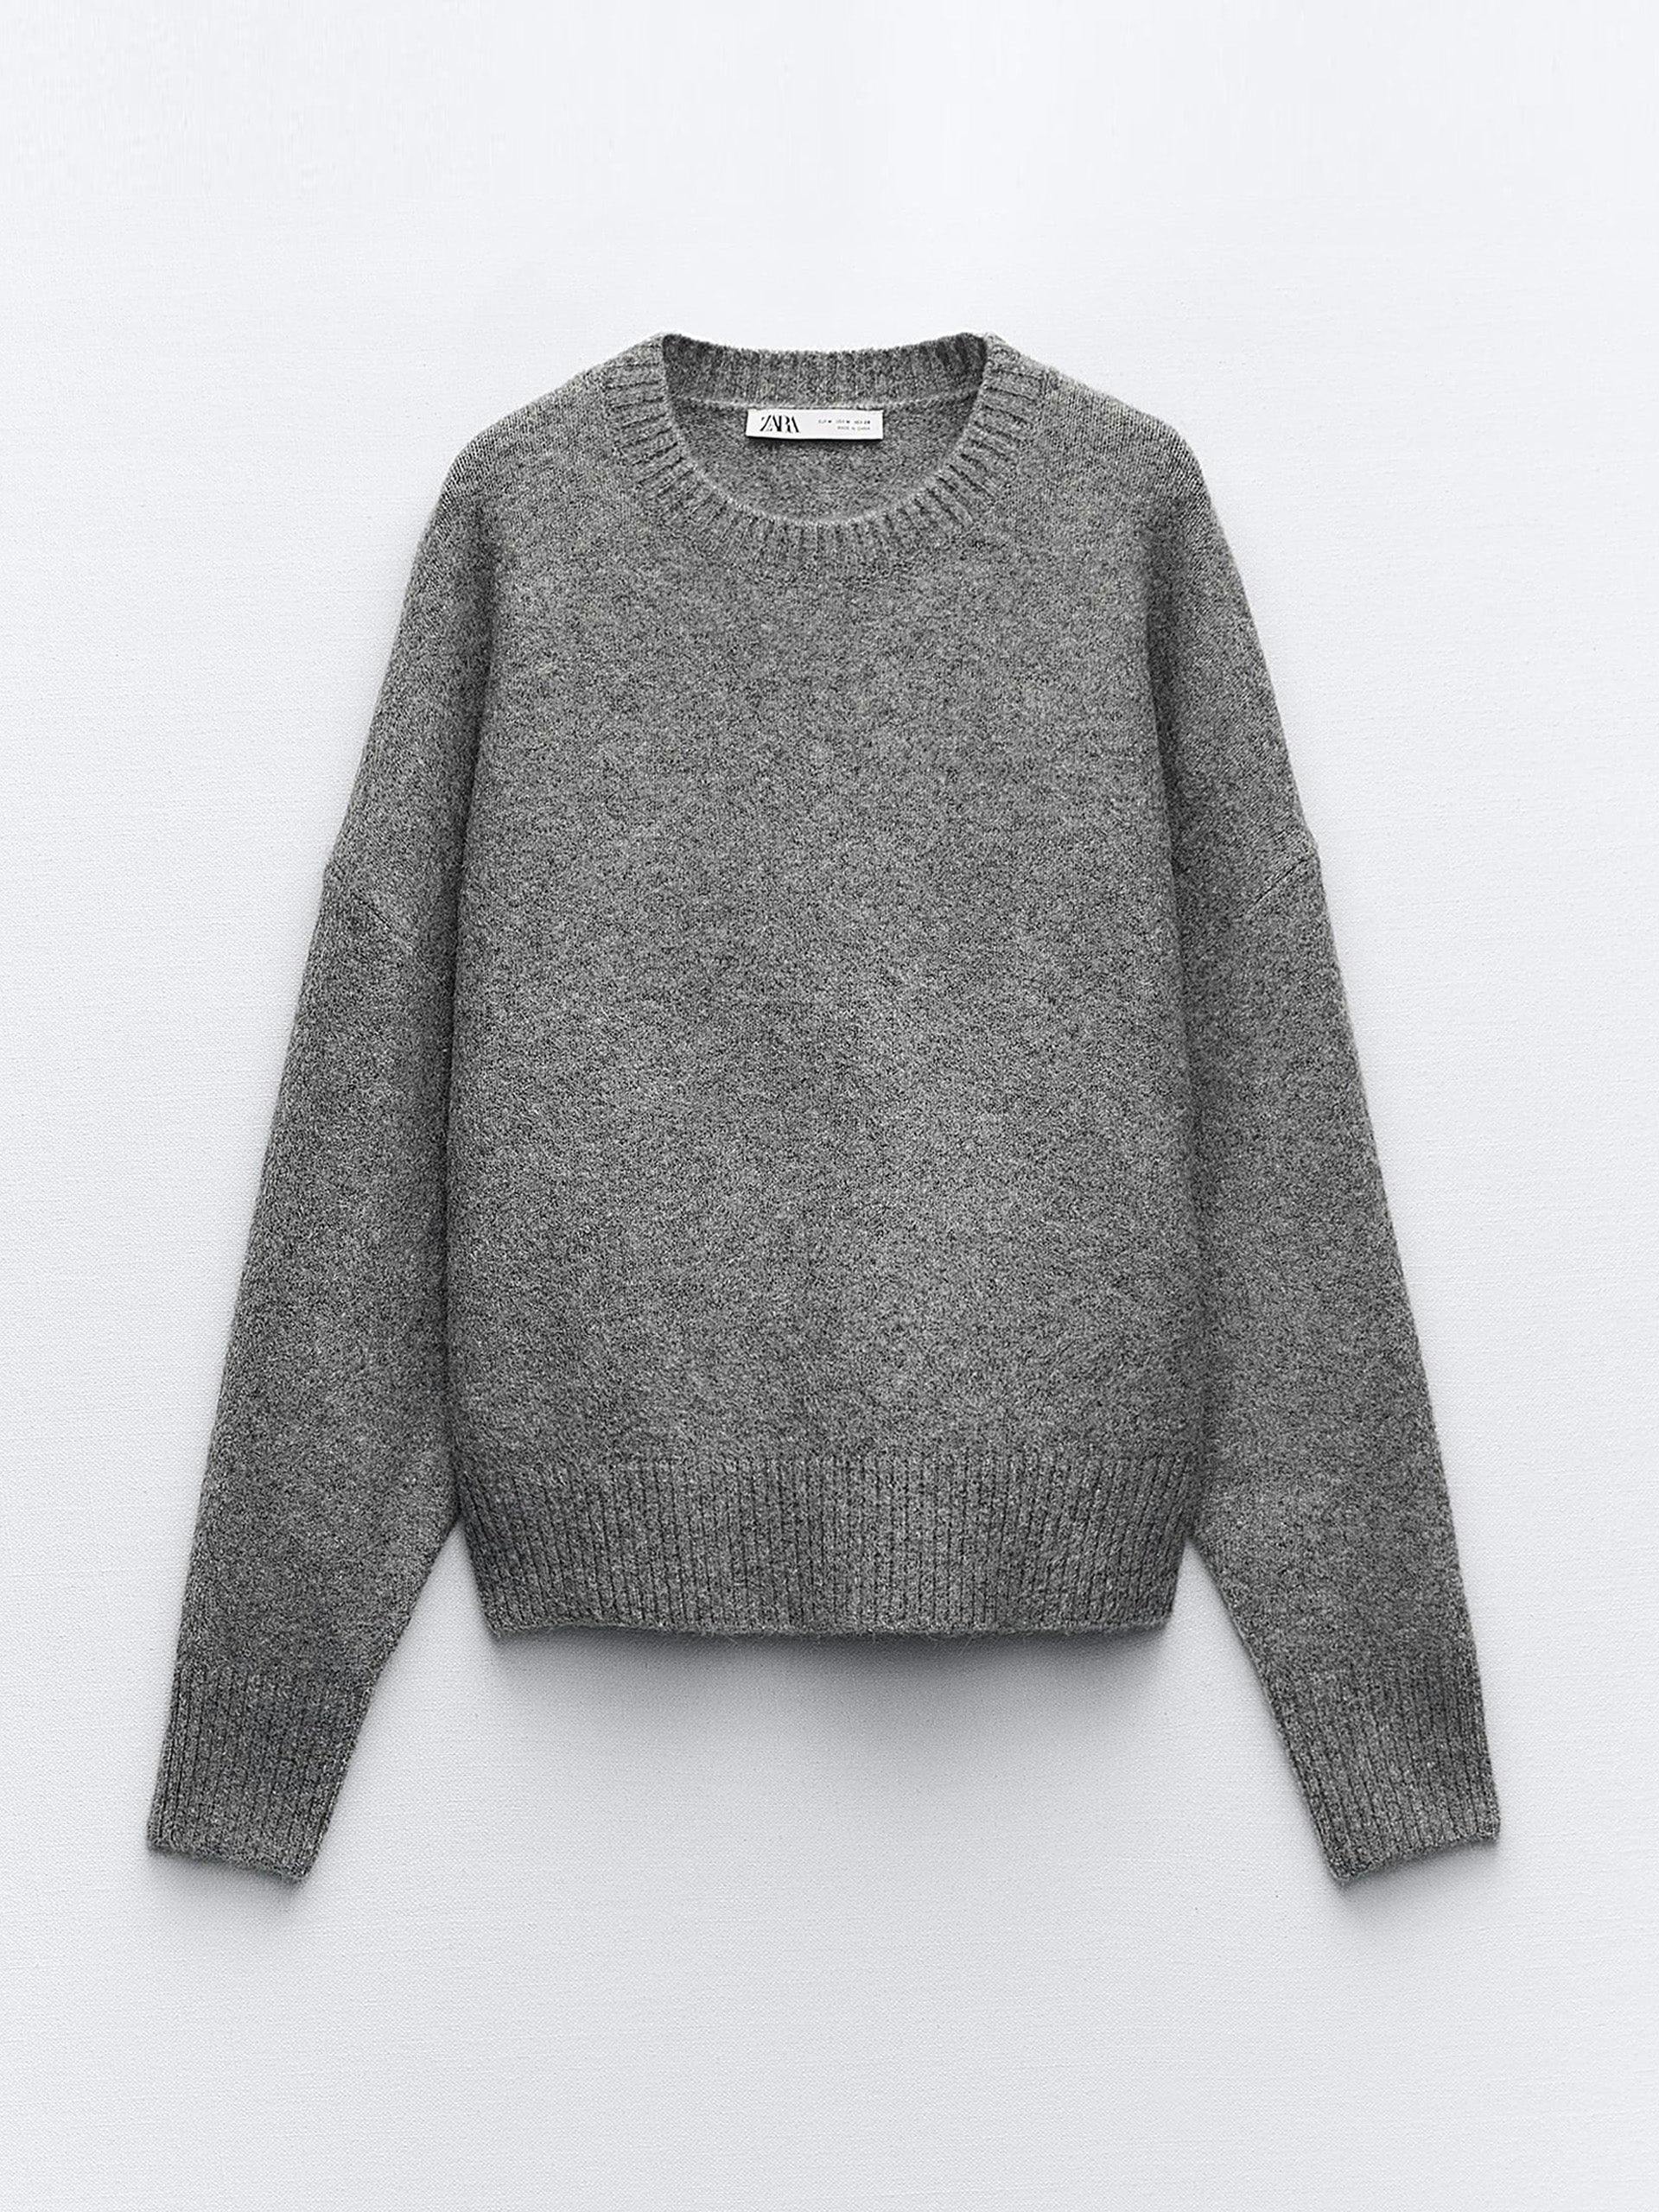 Round neck soft grey knit sweater